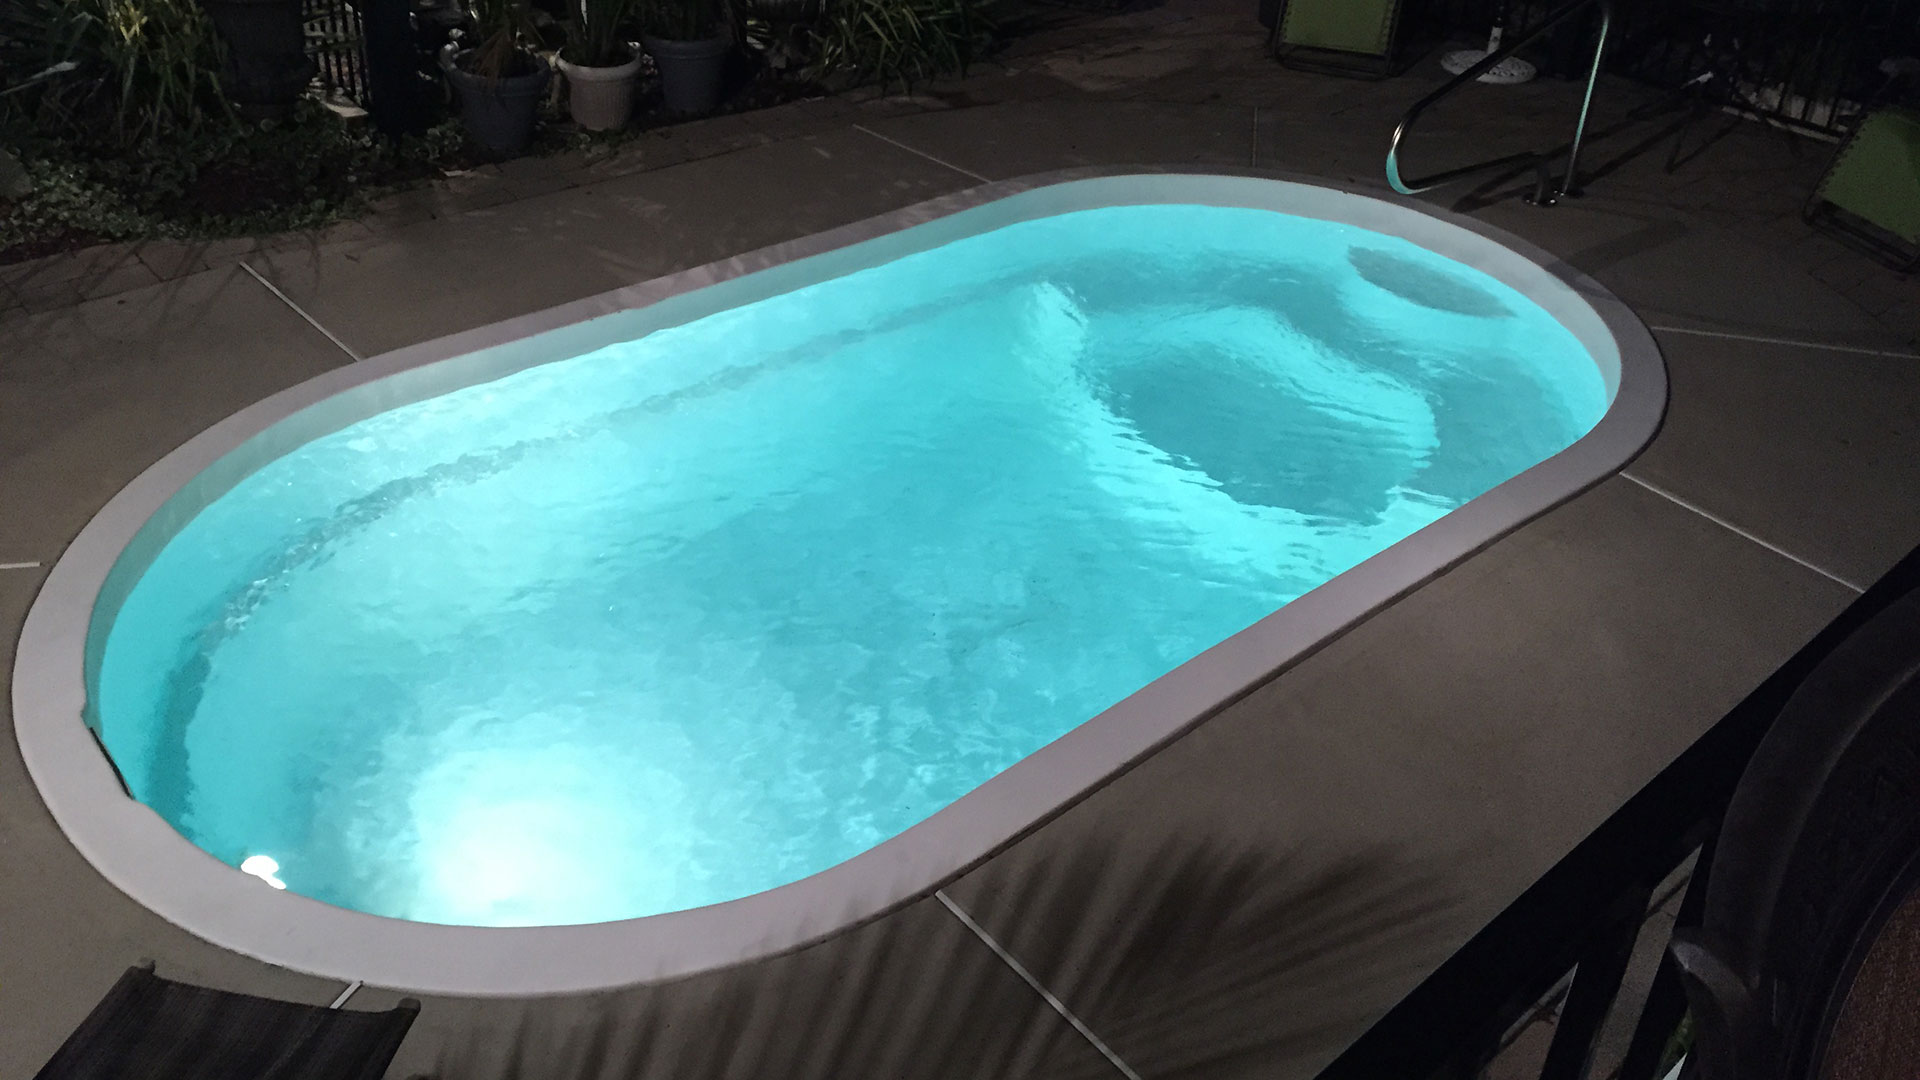 Alaglas Pools Fiberglass Challenger pool in white